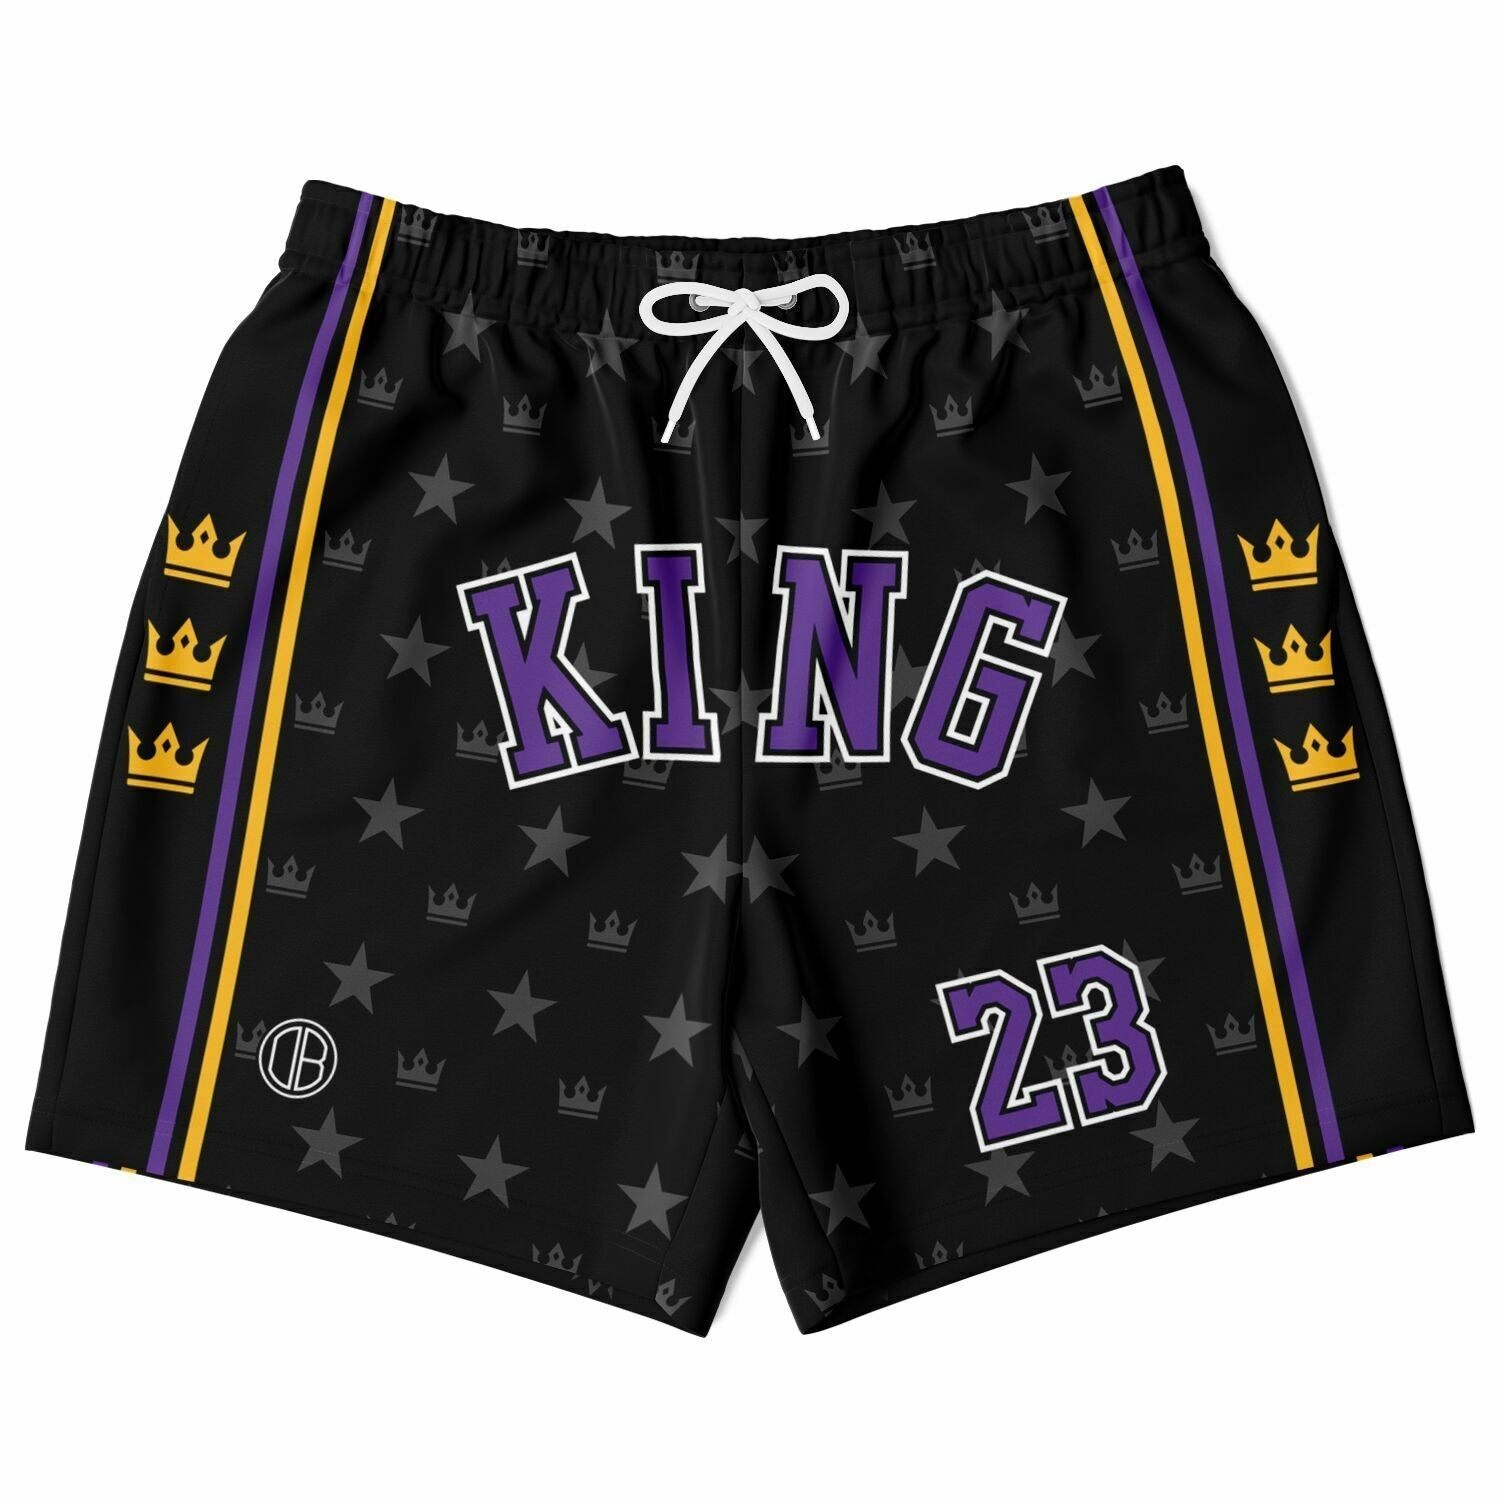 Pantalones cortos de moda DearBBall - KING 23 Los Angeles Stars Edition 